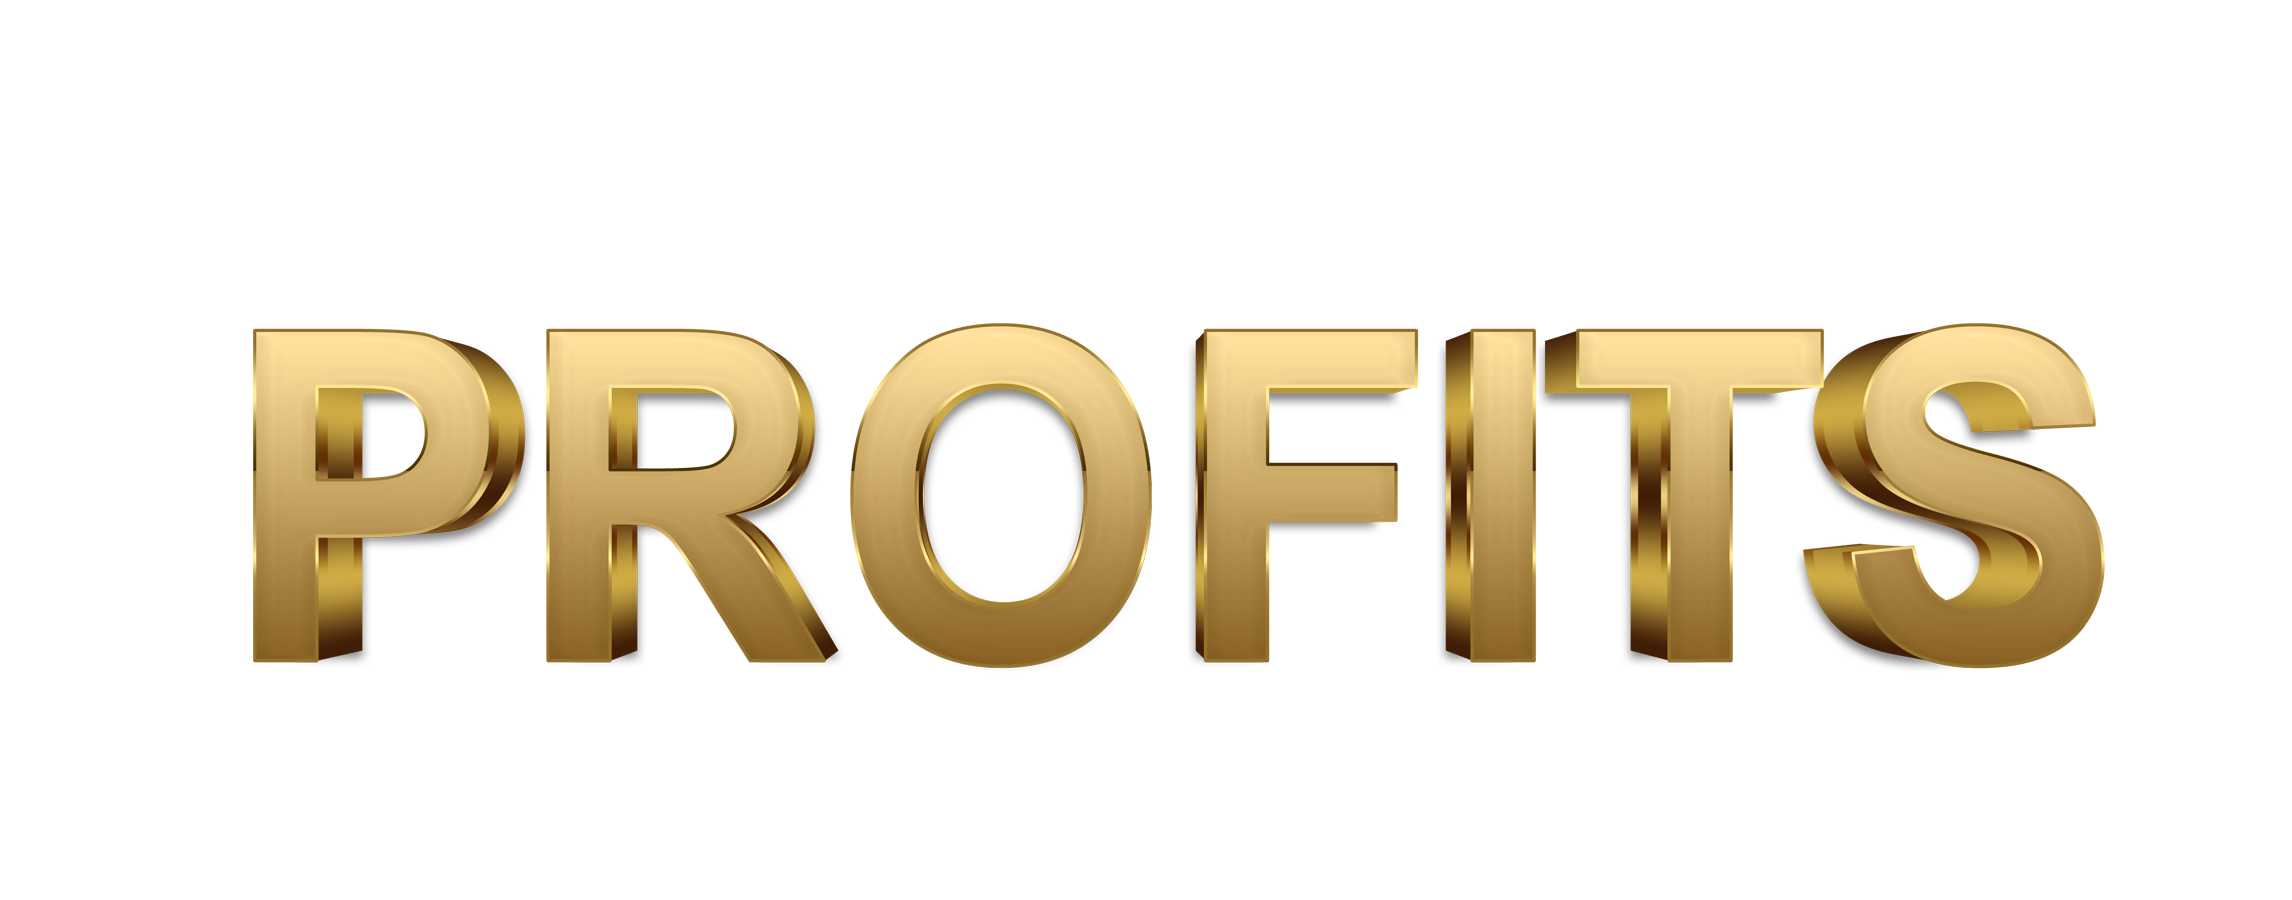 Profits word png, Profits png, word Profits gold text typography PNG images Profits png transparent background